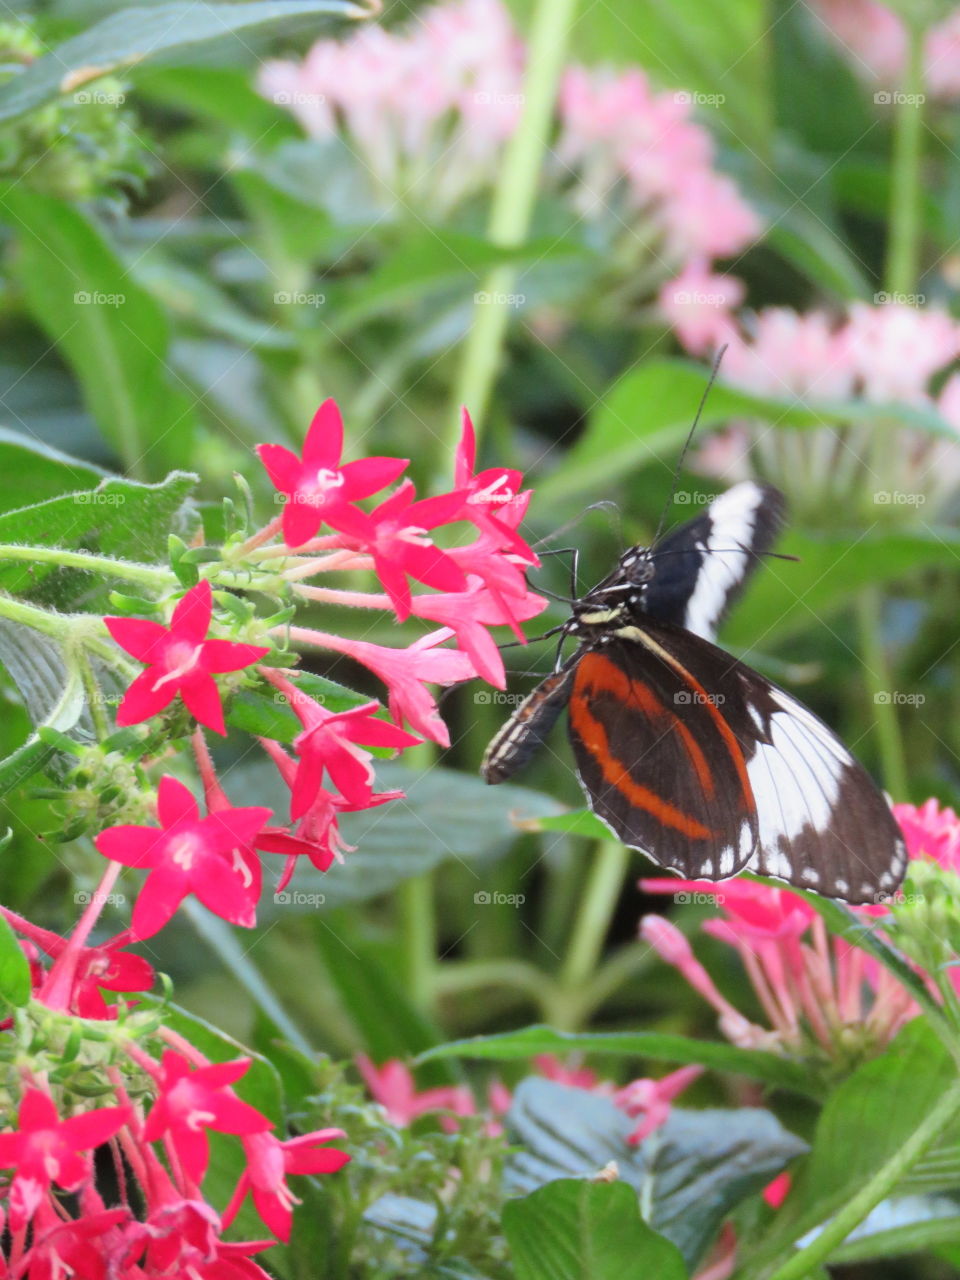 Butterfly sucking nectar.